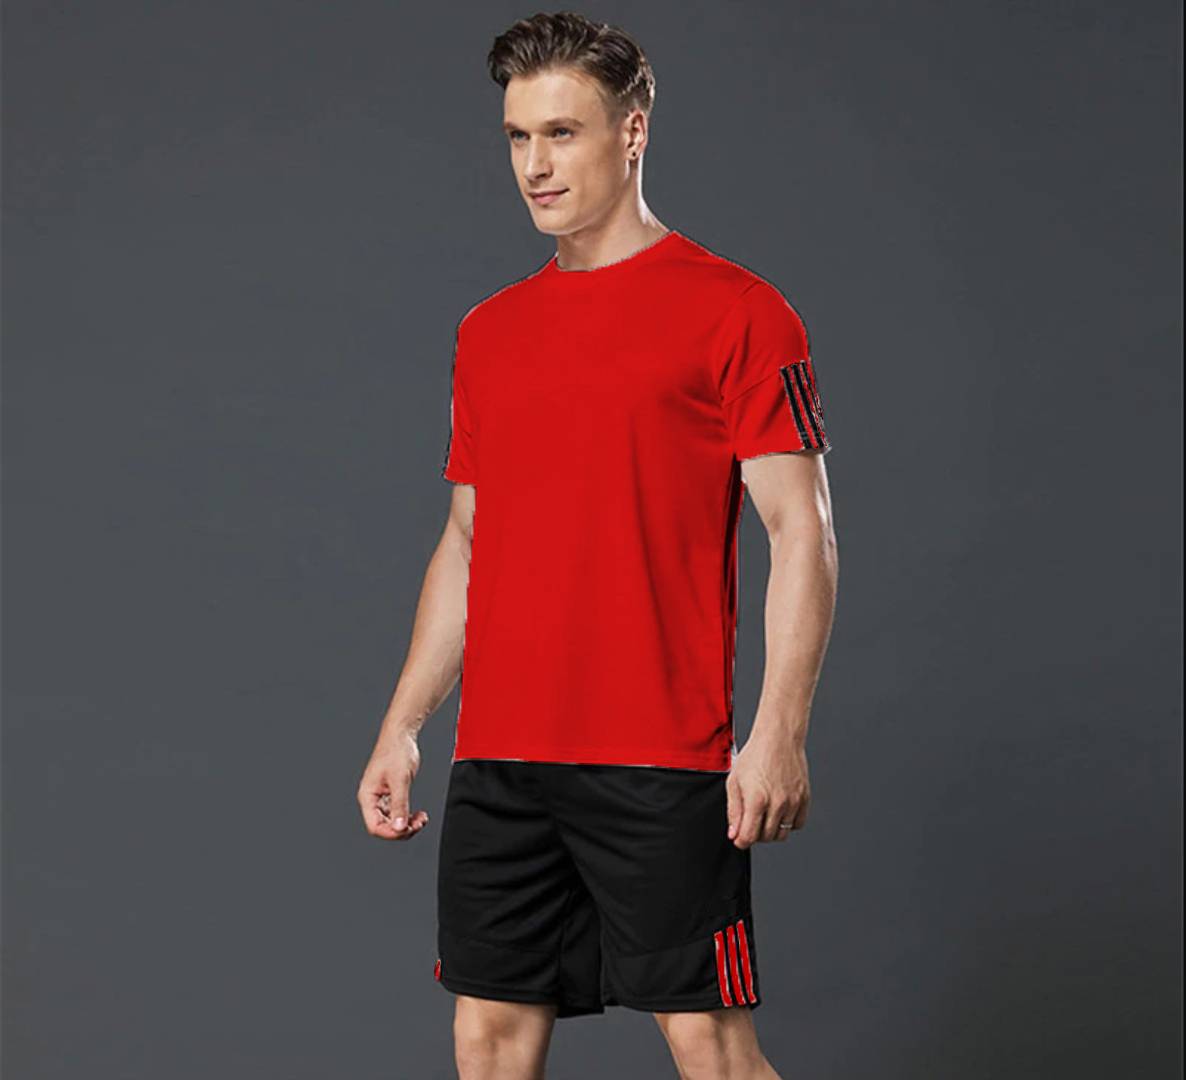 Men's Multicolored Sports T Shirt & Shorts Set